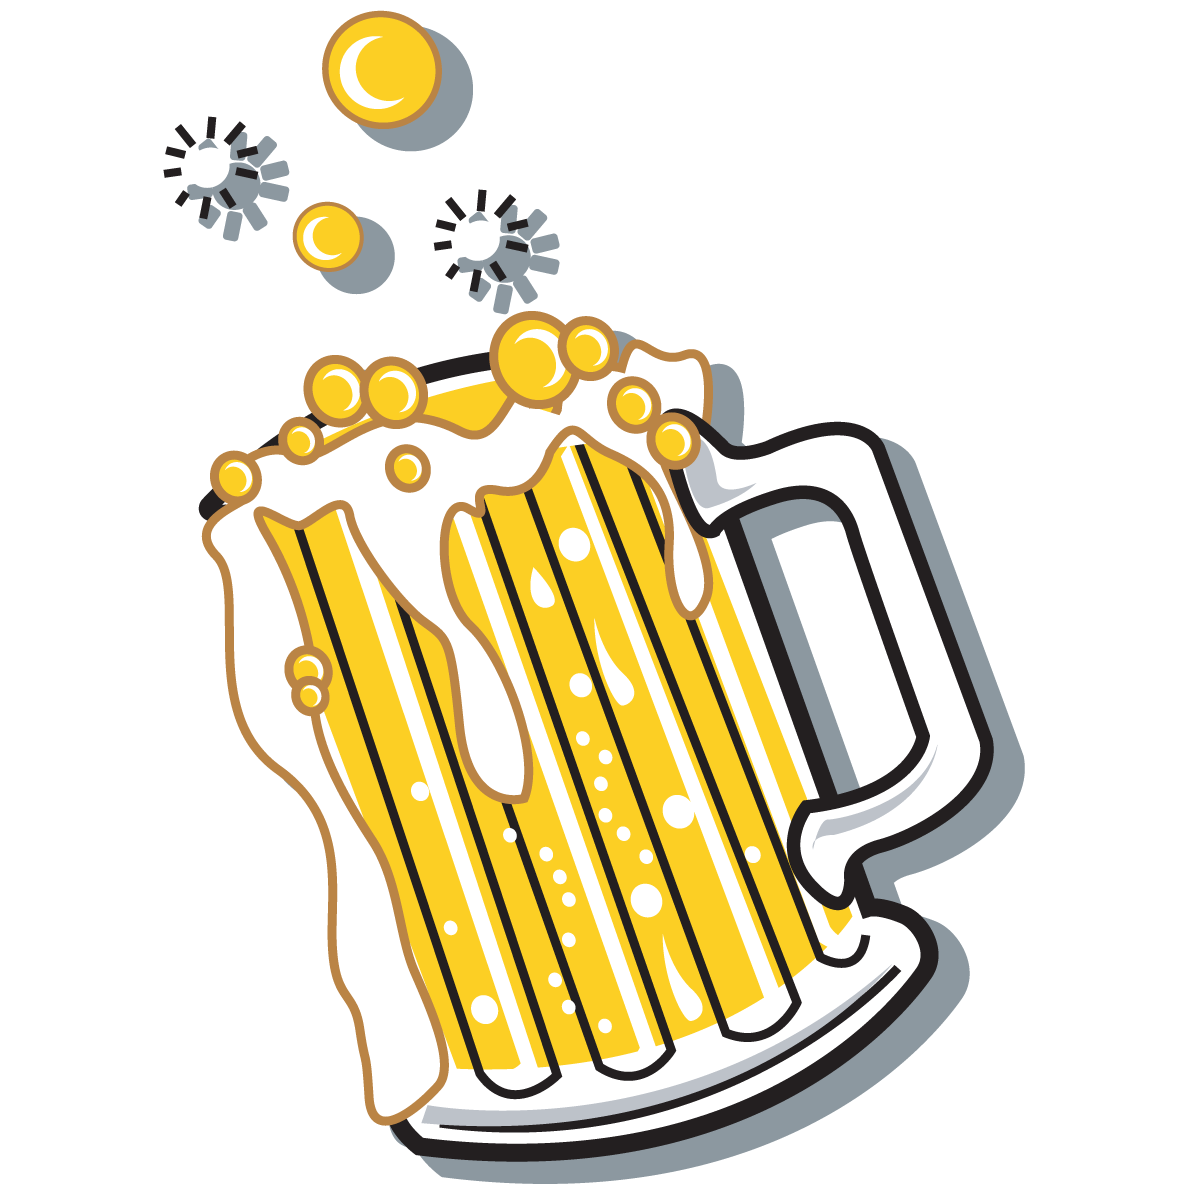 Beer Cartoon drawing free image download